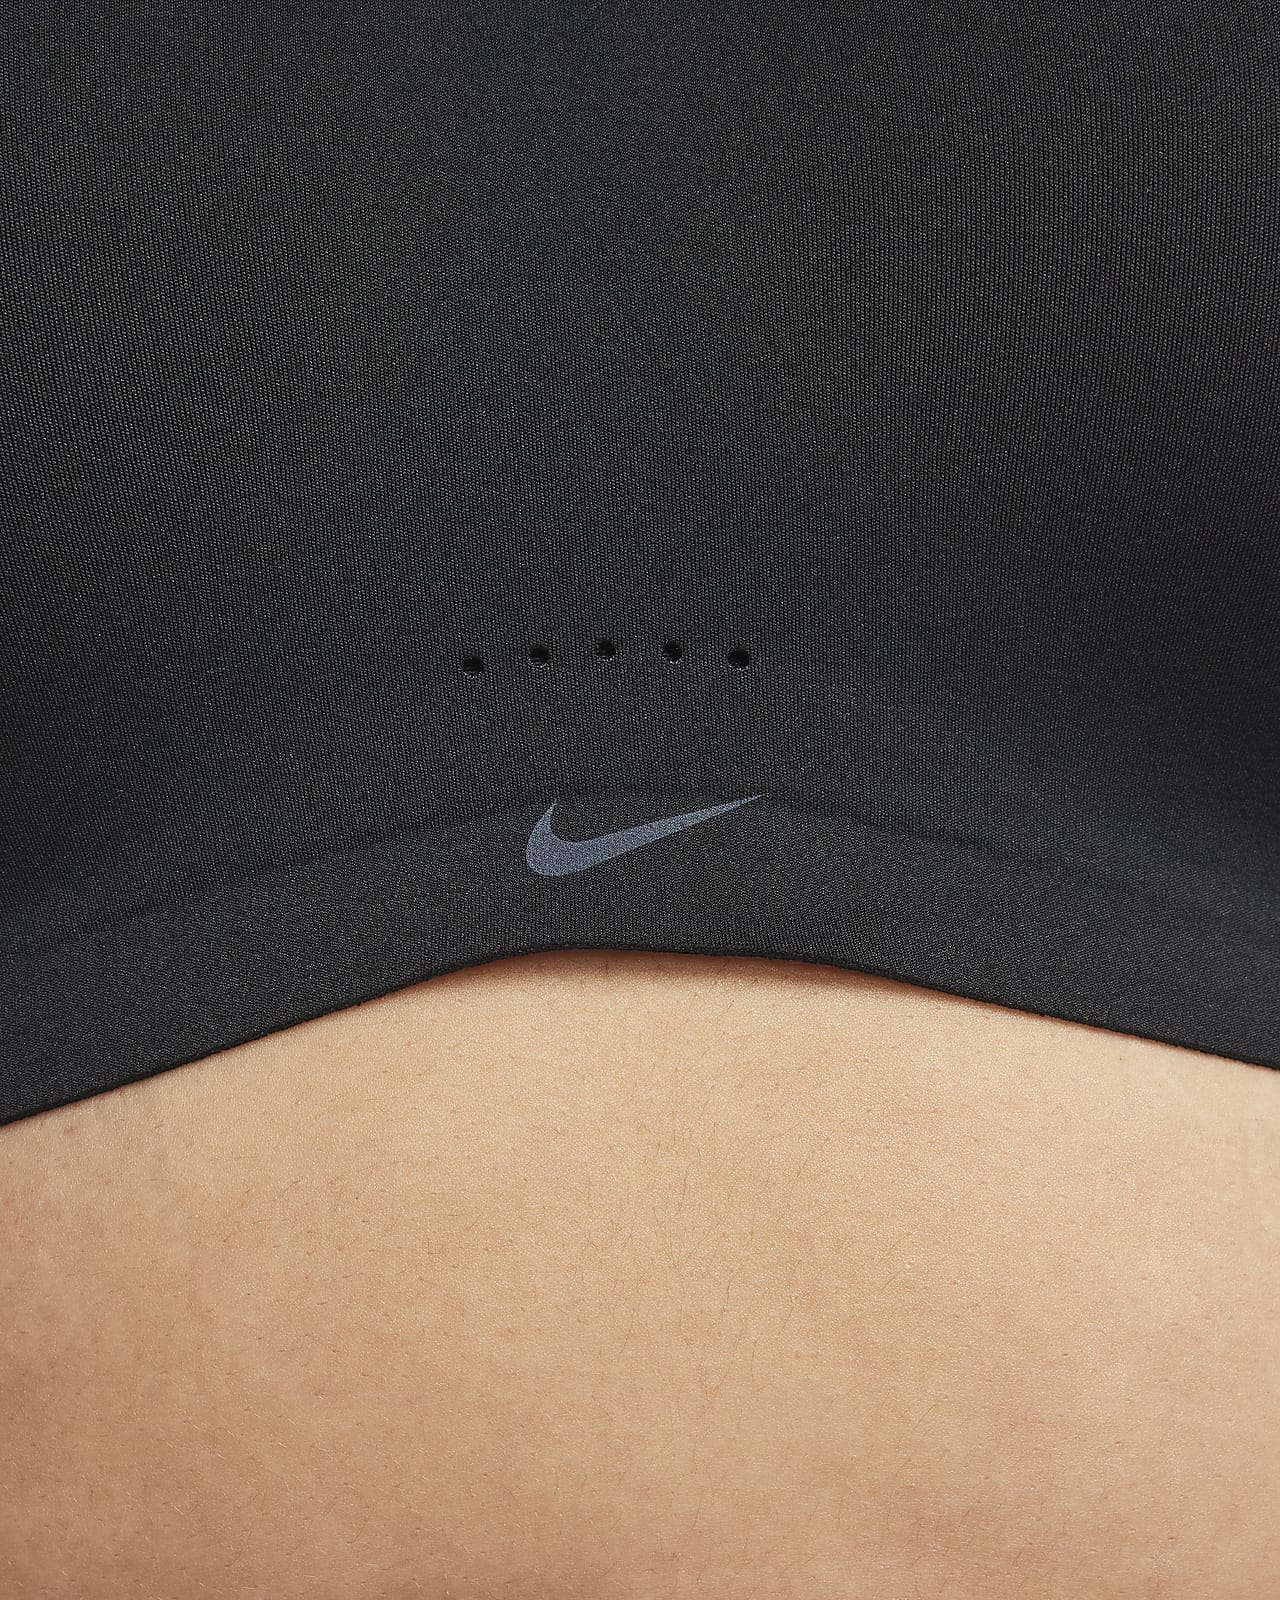 Nike Nike Sports Bra Size Large Gray Women's Support DRI FIT Breatable  Lightweight